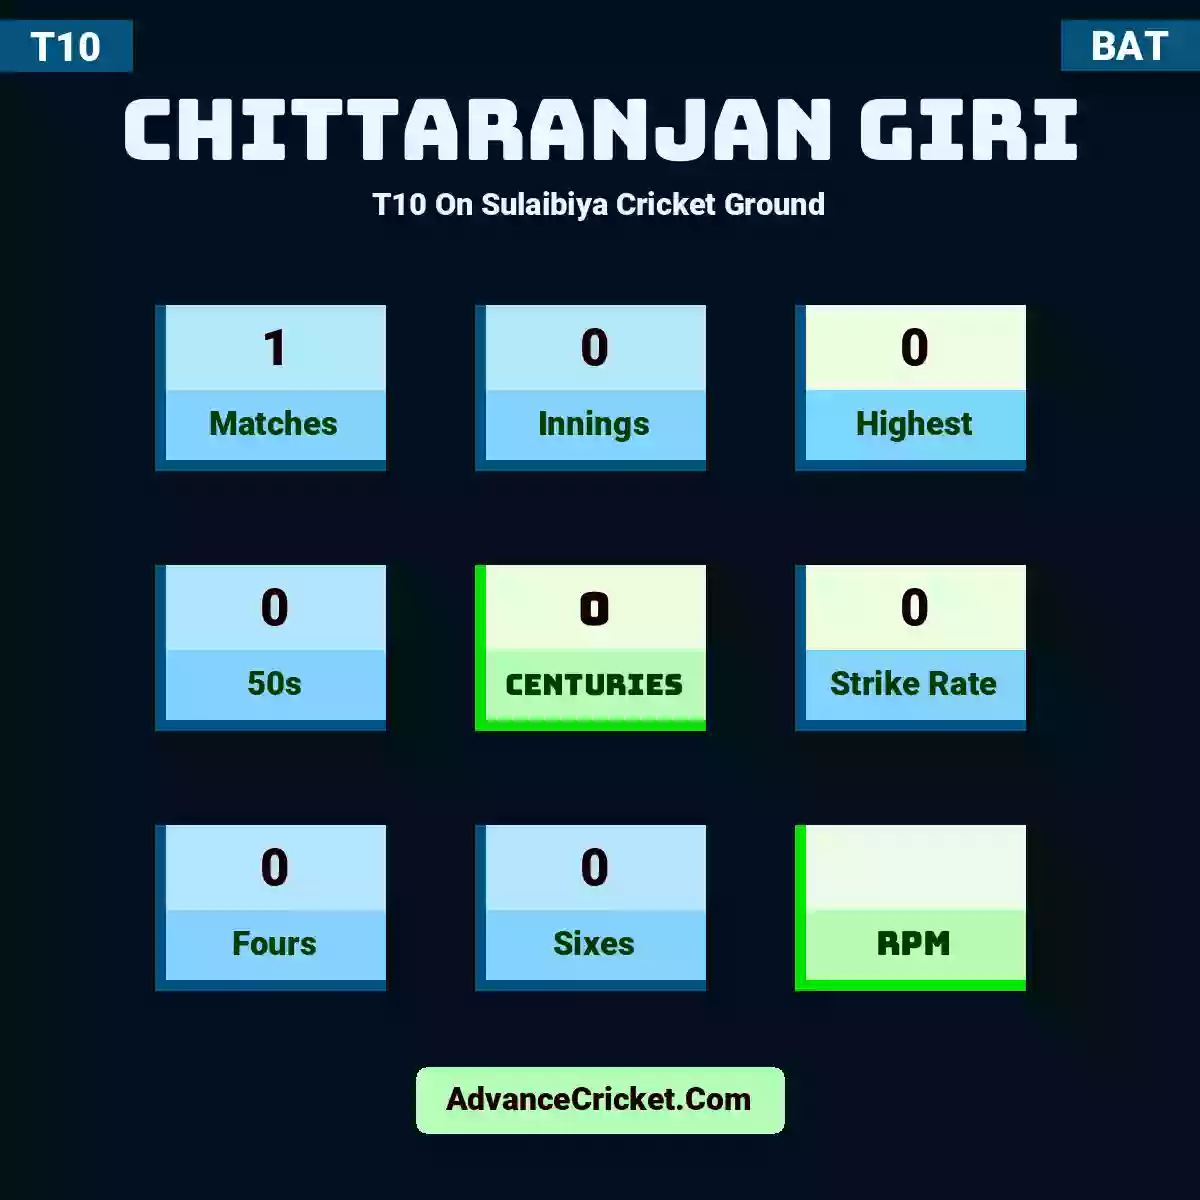 Chittaranjan Giri T10  On Sulaibiya Cricket Ground, Chittaranjan Giri played 1 matches, scored 0 runs as highest, 0 half-centuries, and 0 centuries, with a strike rate of 0. C.Giri hit 0 fours and 0 sixes.